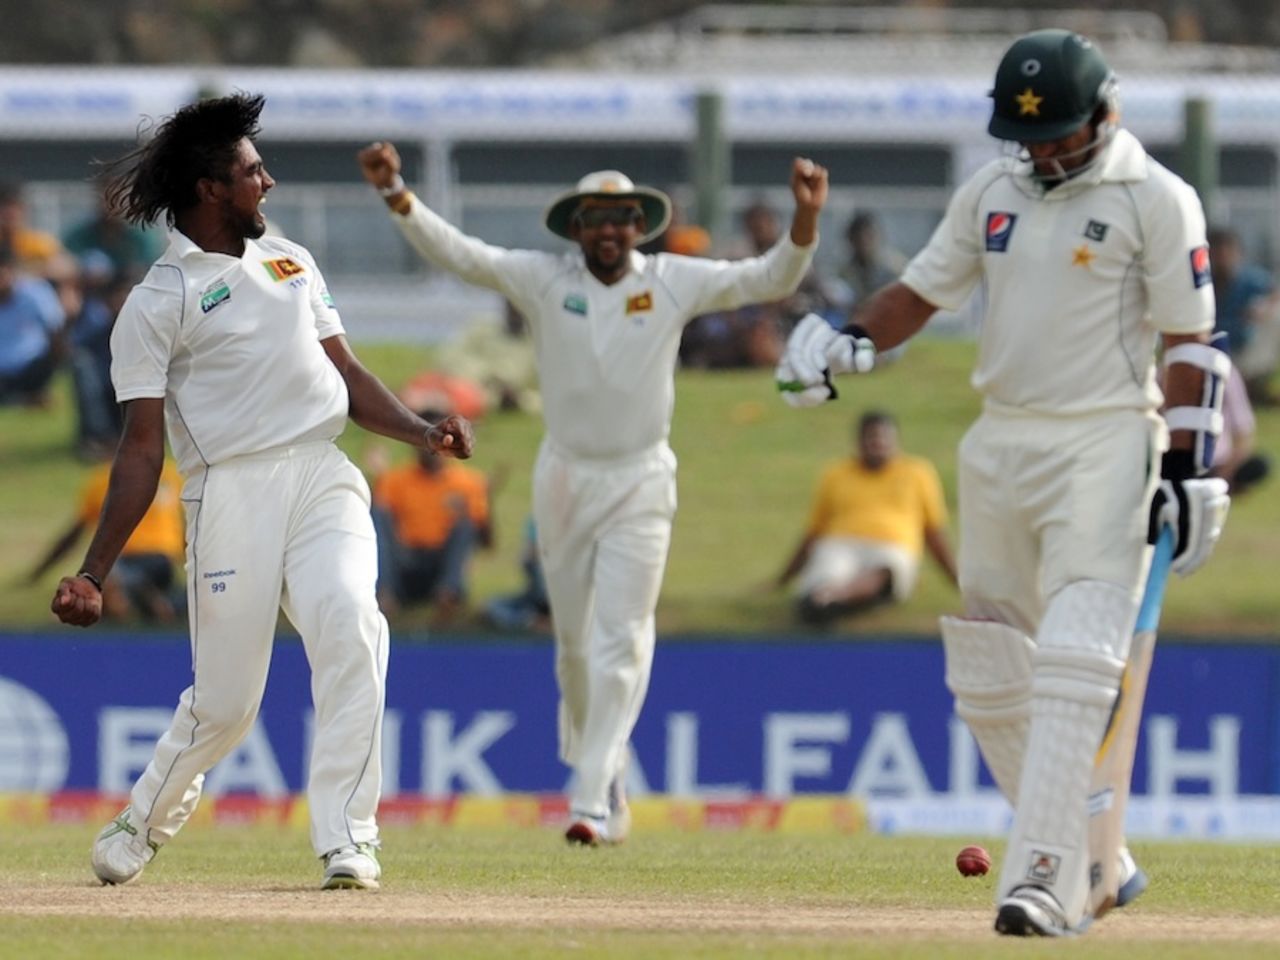 Nuwan Pradeep dismissed Mohammad Ayub lbw, Sri Lanka v Pakistan, 1st Test, Galle, 4th day, June 25, 2012